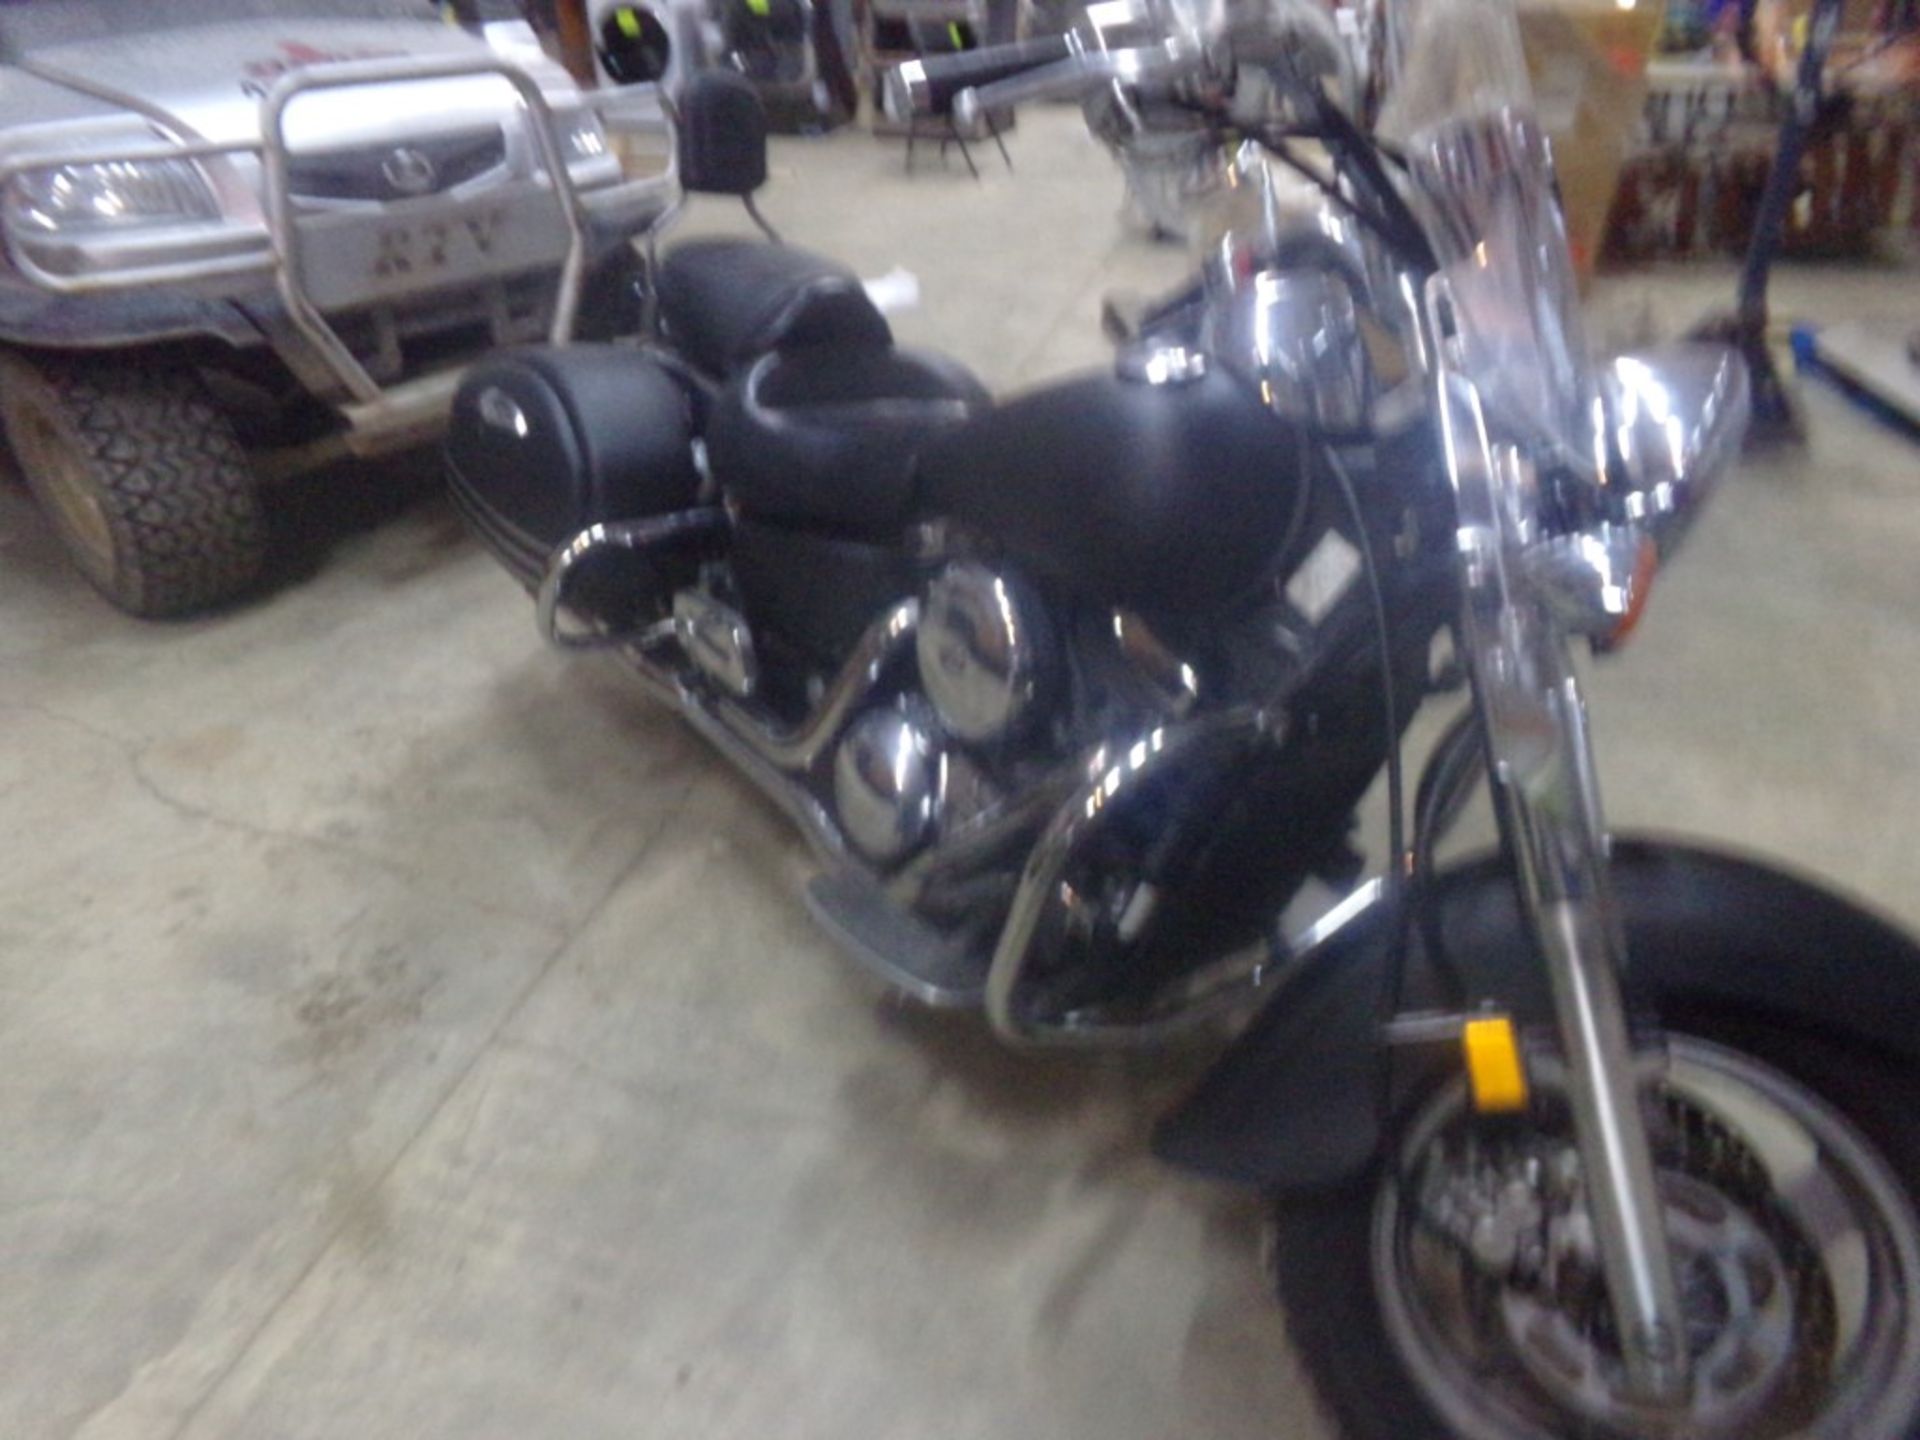 1998 Valcan Kawasaki 1500c Motorcycle w/Side Bags, Windshield, Flat Black, 19,662 Miles, VIN#: - Image 2 of 7